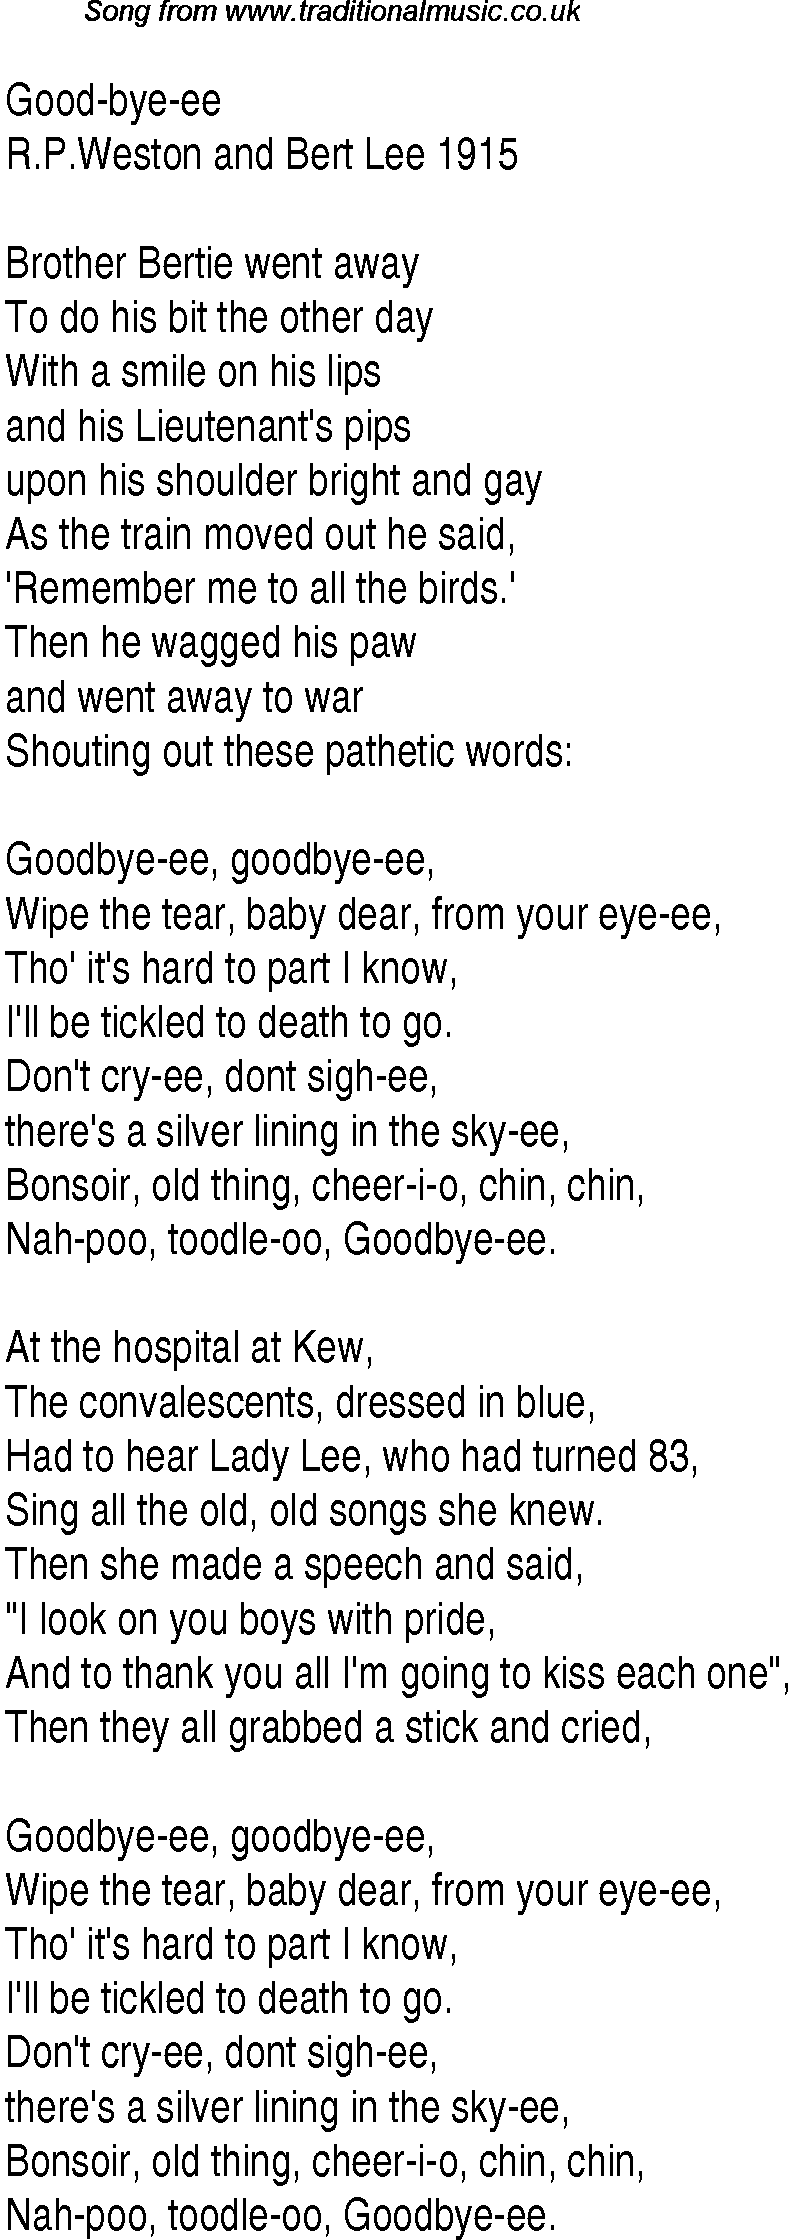 1940s top songs - lyrics for Good Bye Ee